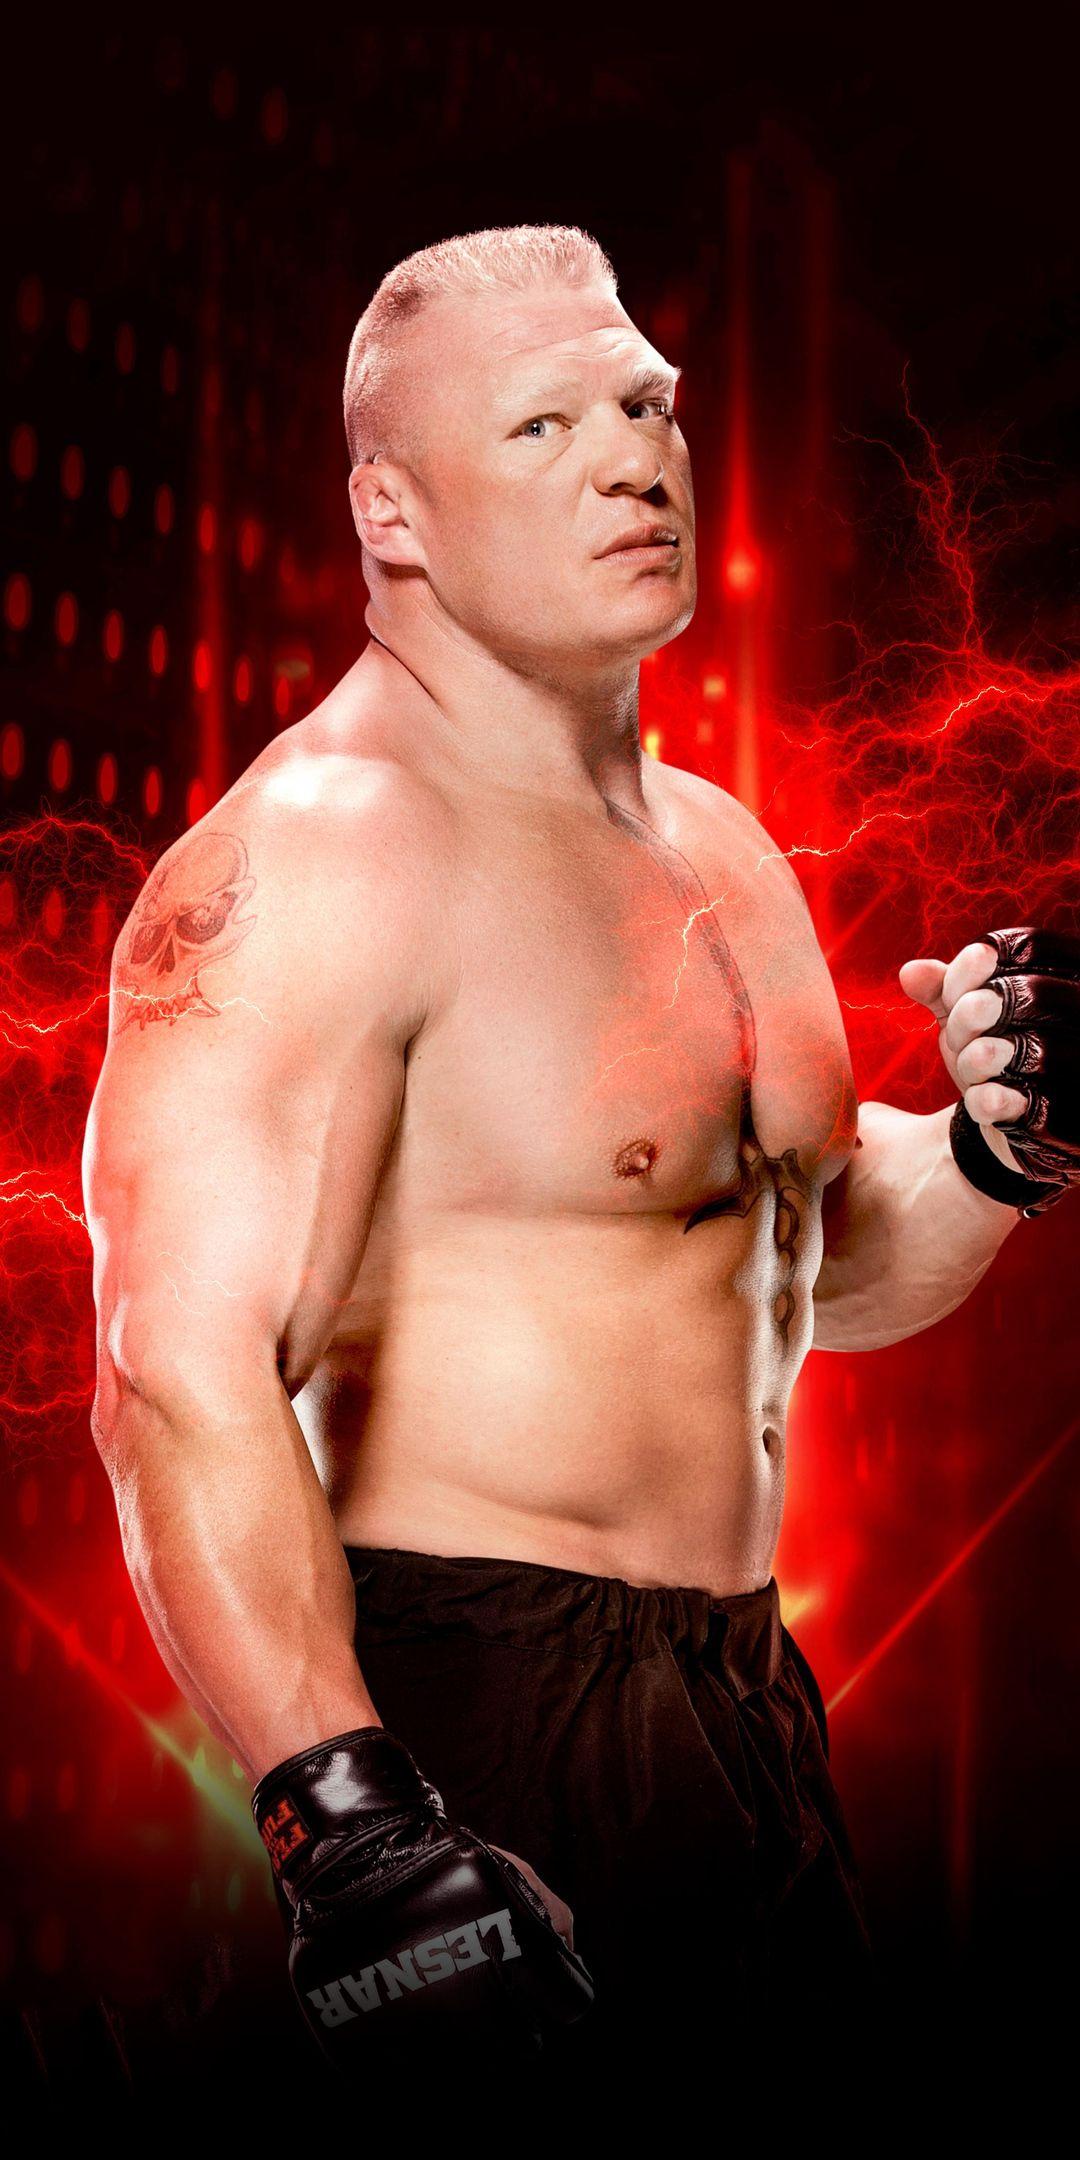 Brock Lesnar WWE 2K19 One Plus 5T, Honor 7x, Honor view 10